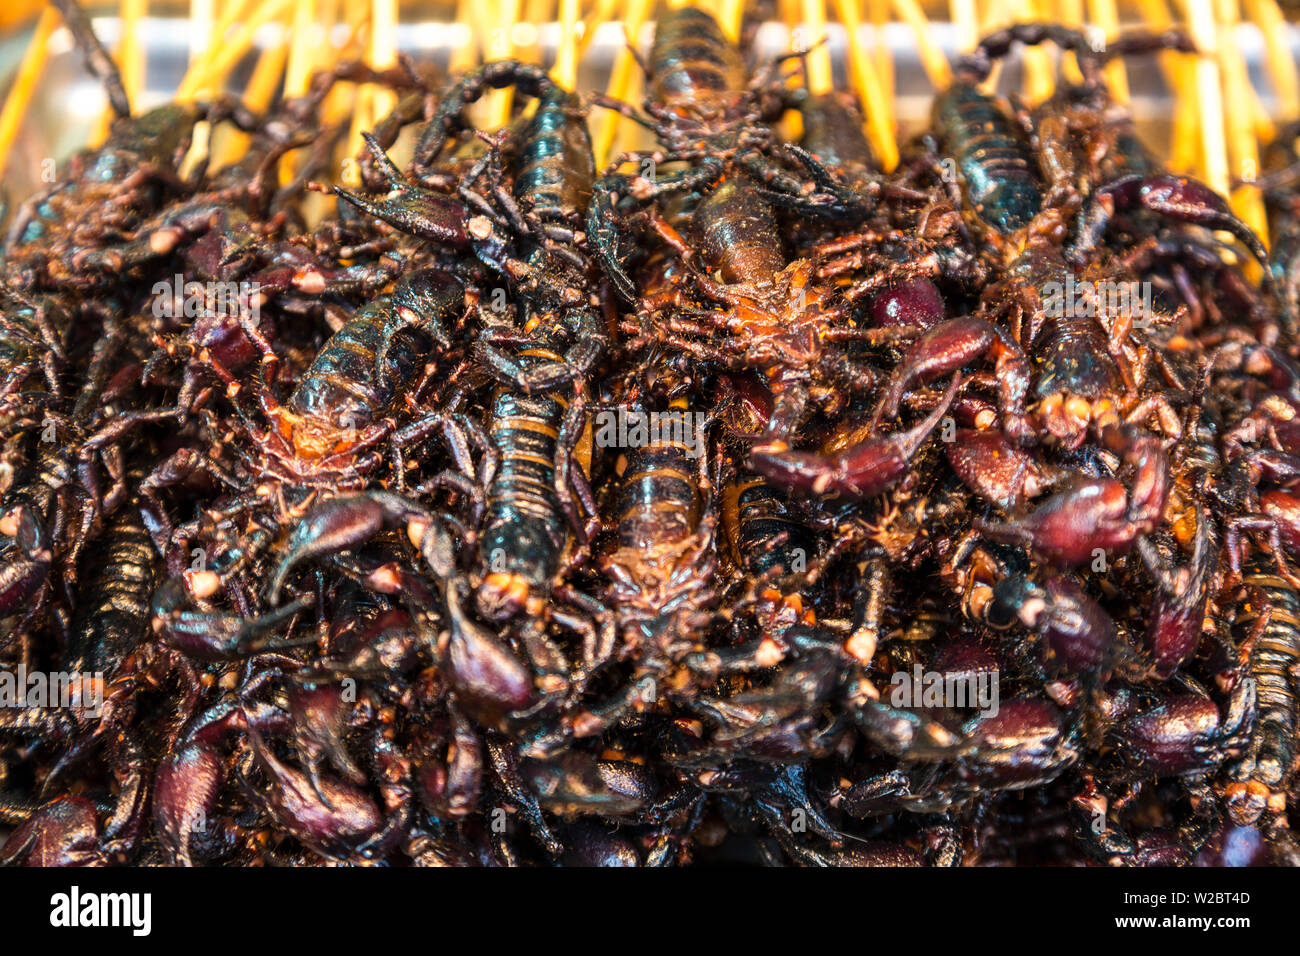 Scorpions on sticks, Donghuamen Night Market, Wangfujing, Beijing, China Stock Photo